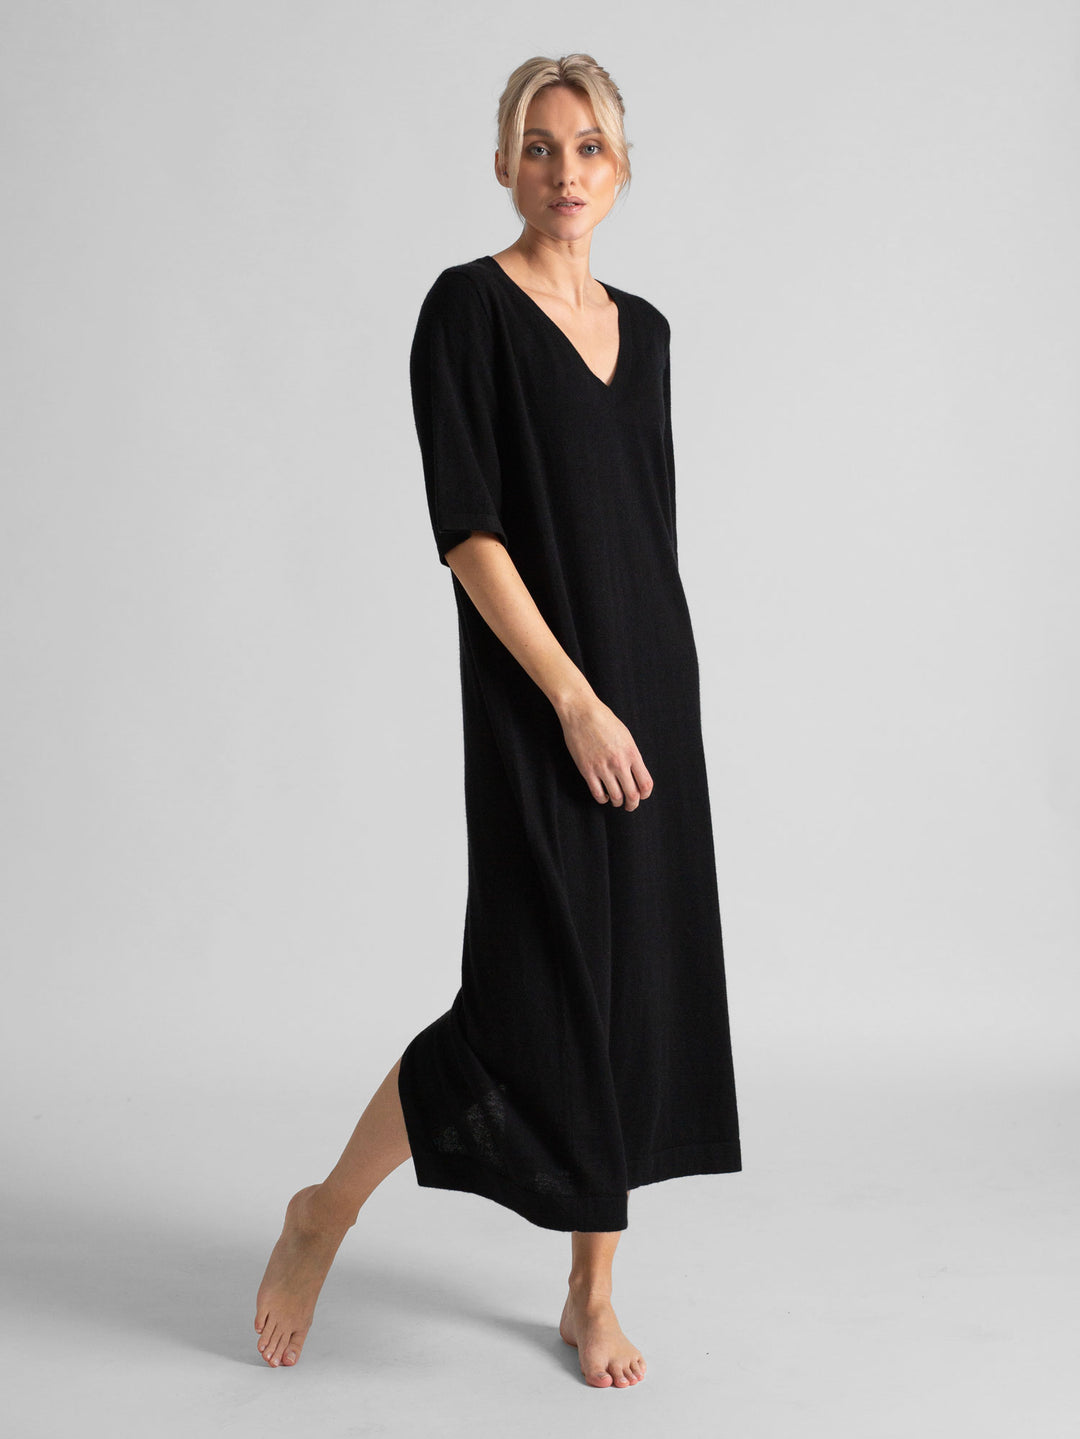 Long, light, thin, cashmere dress "June" in 100% pure cashmere. Color: Black. Scandinavian design by Kashmina.